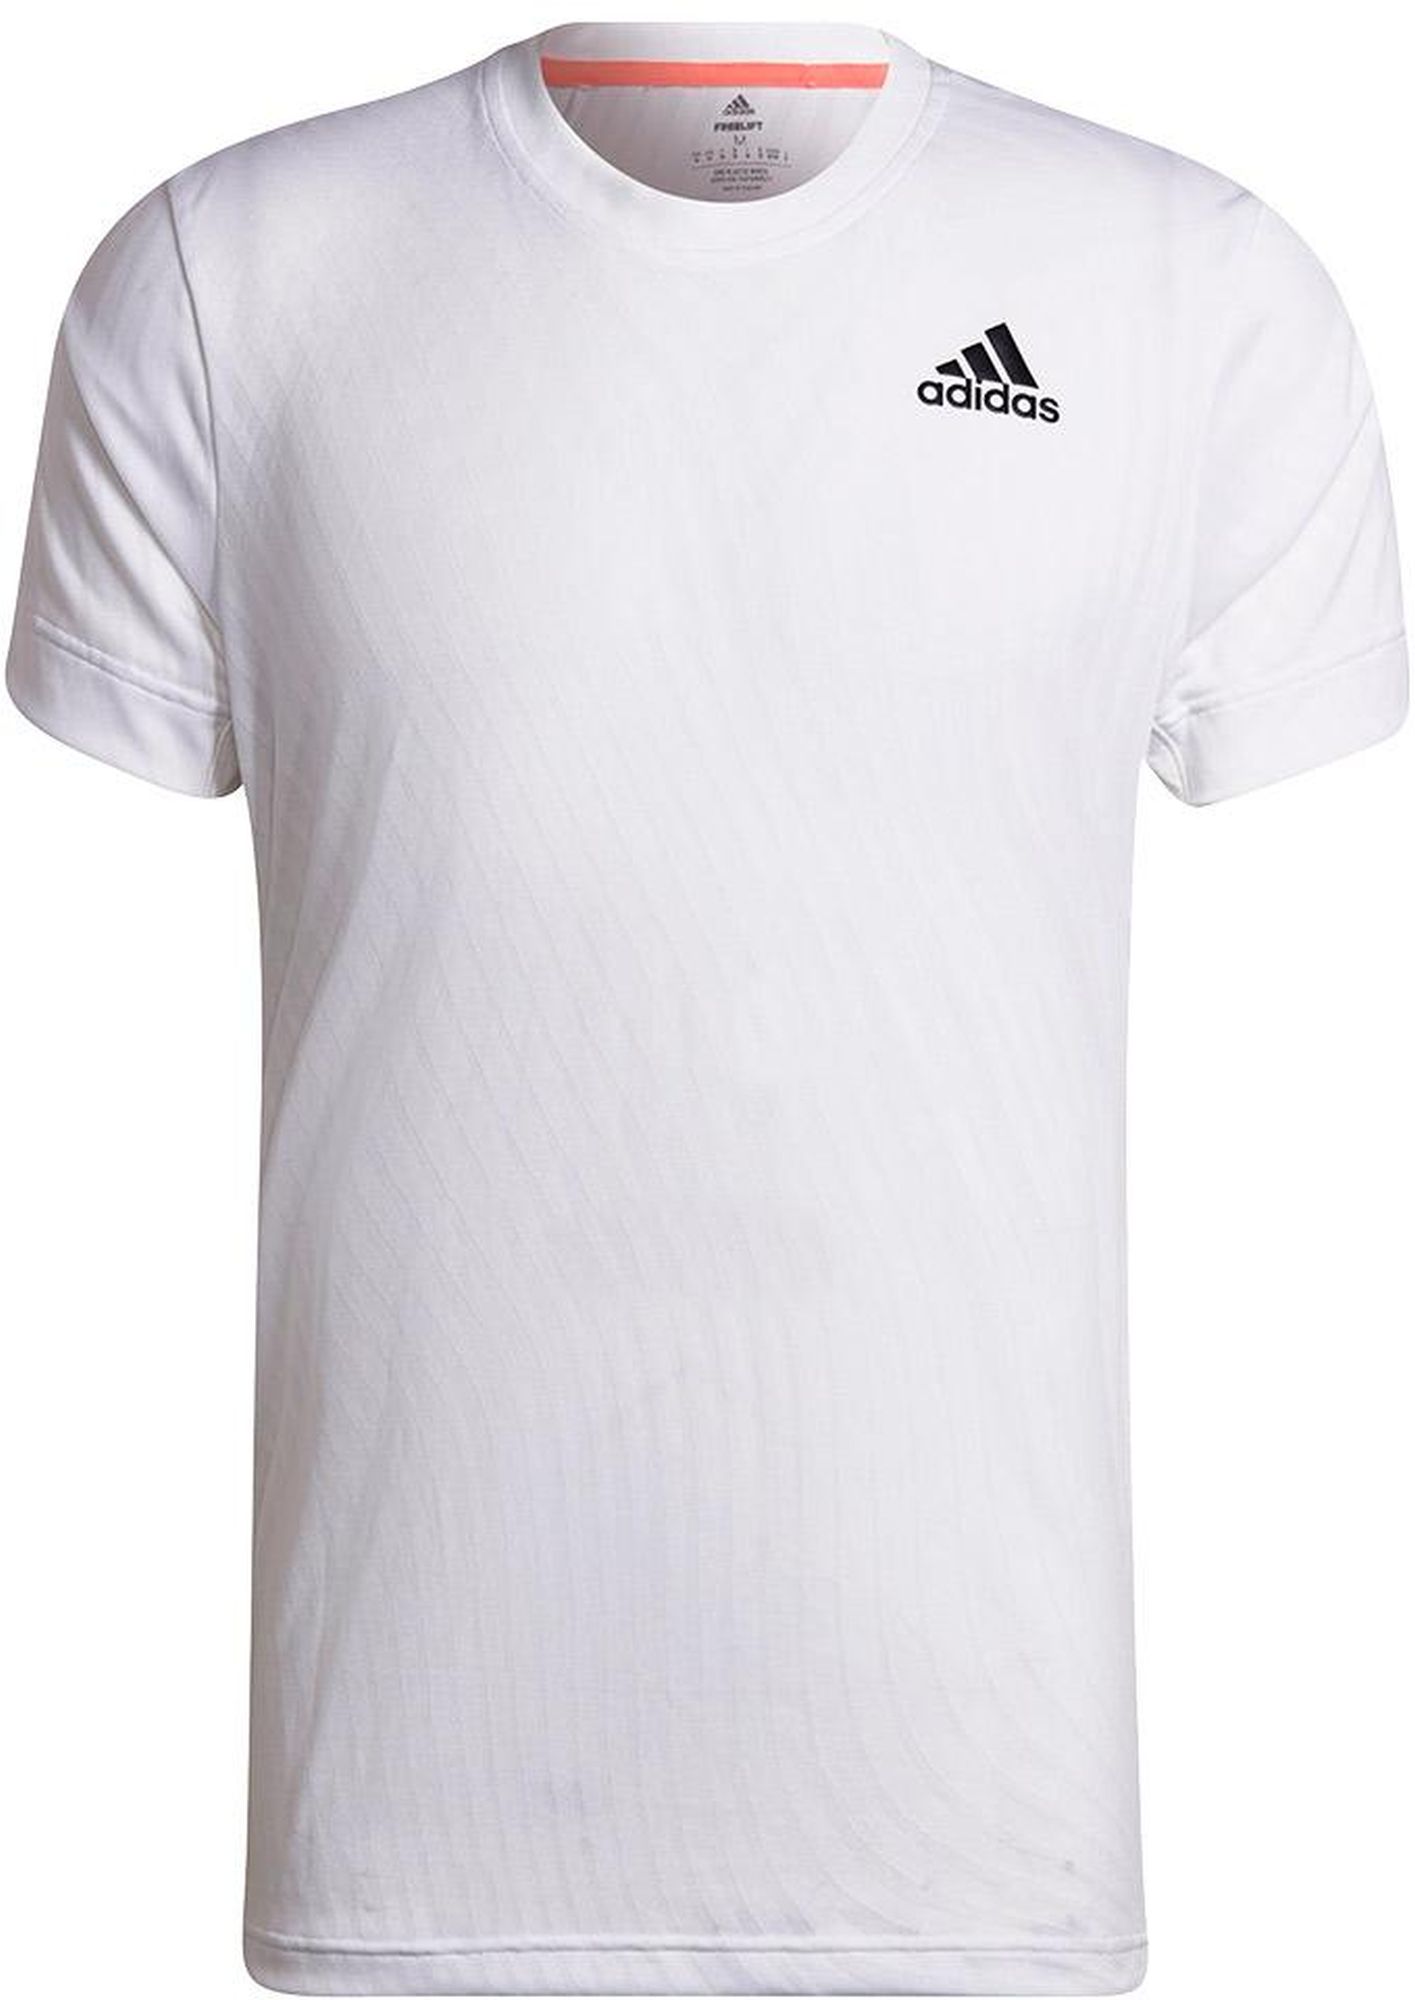 despierta Todavía perdonado Adidas Men's Freelift Short Sleeve Tennis Tee (White)